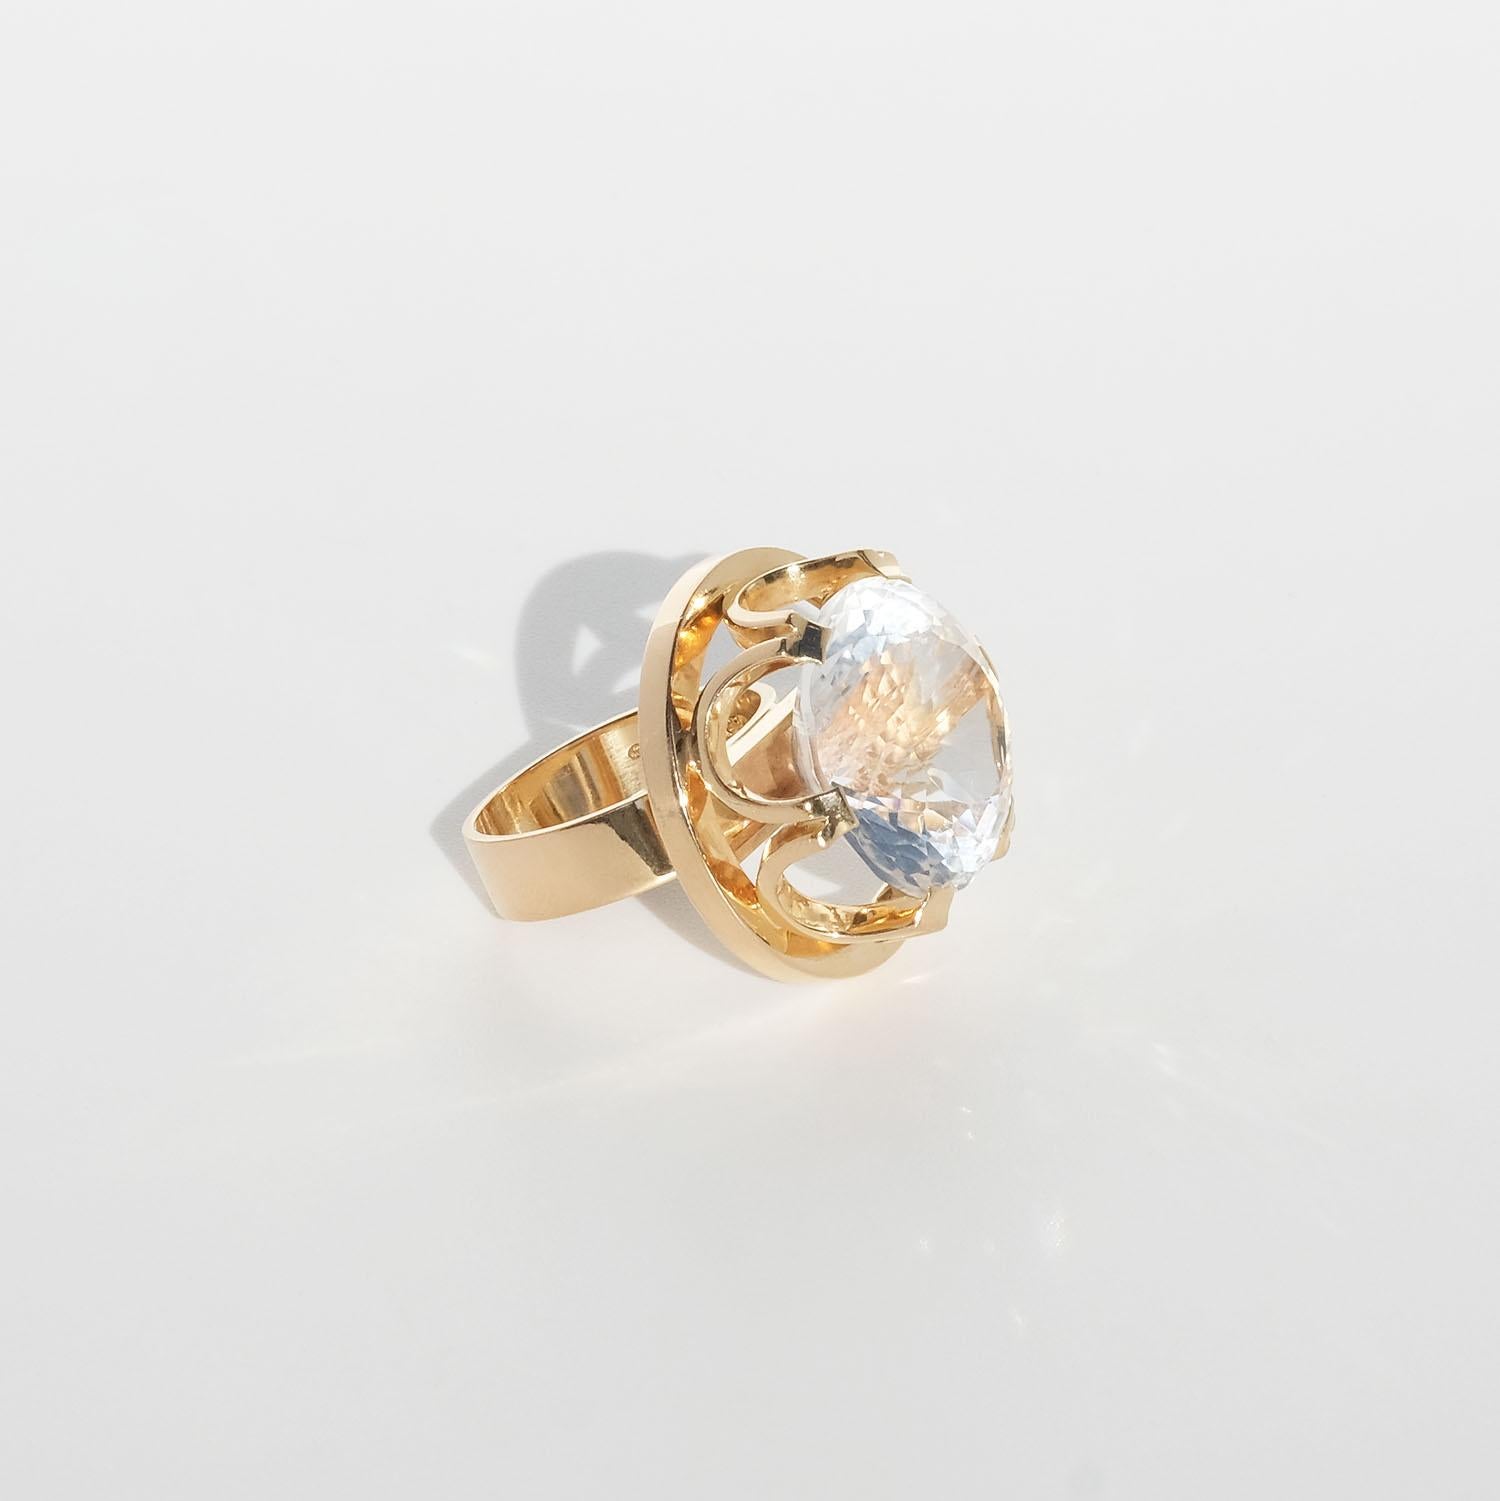 Vintage 18k Gold and Rock Crystal Ring by Finnish Master Kaunis Koru For Sale 3